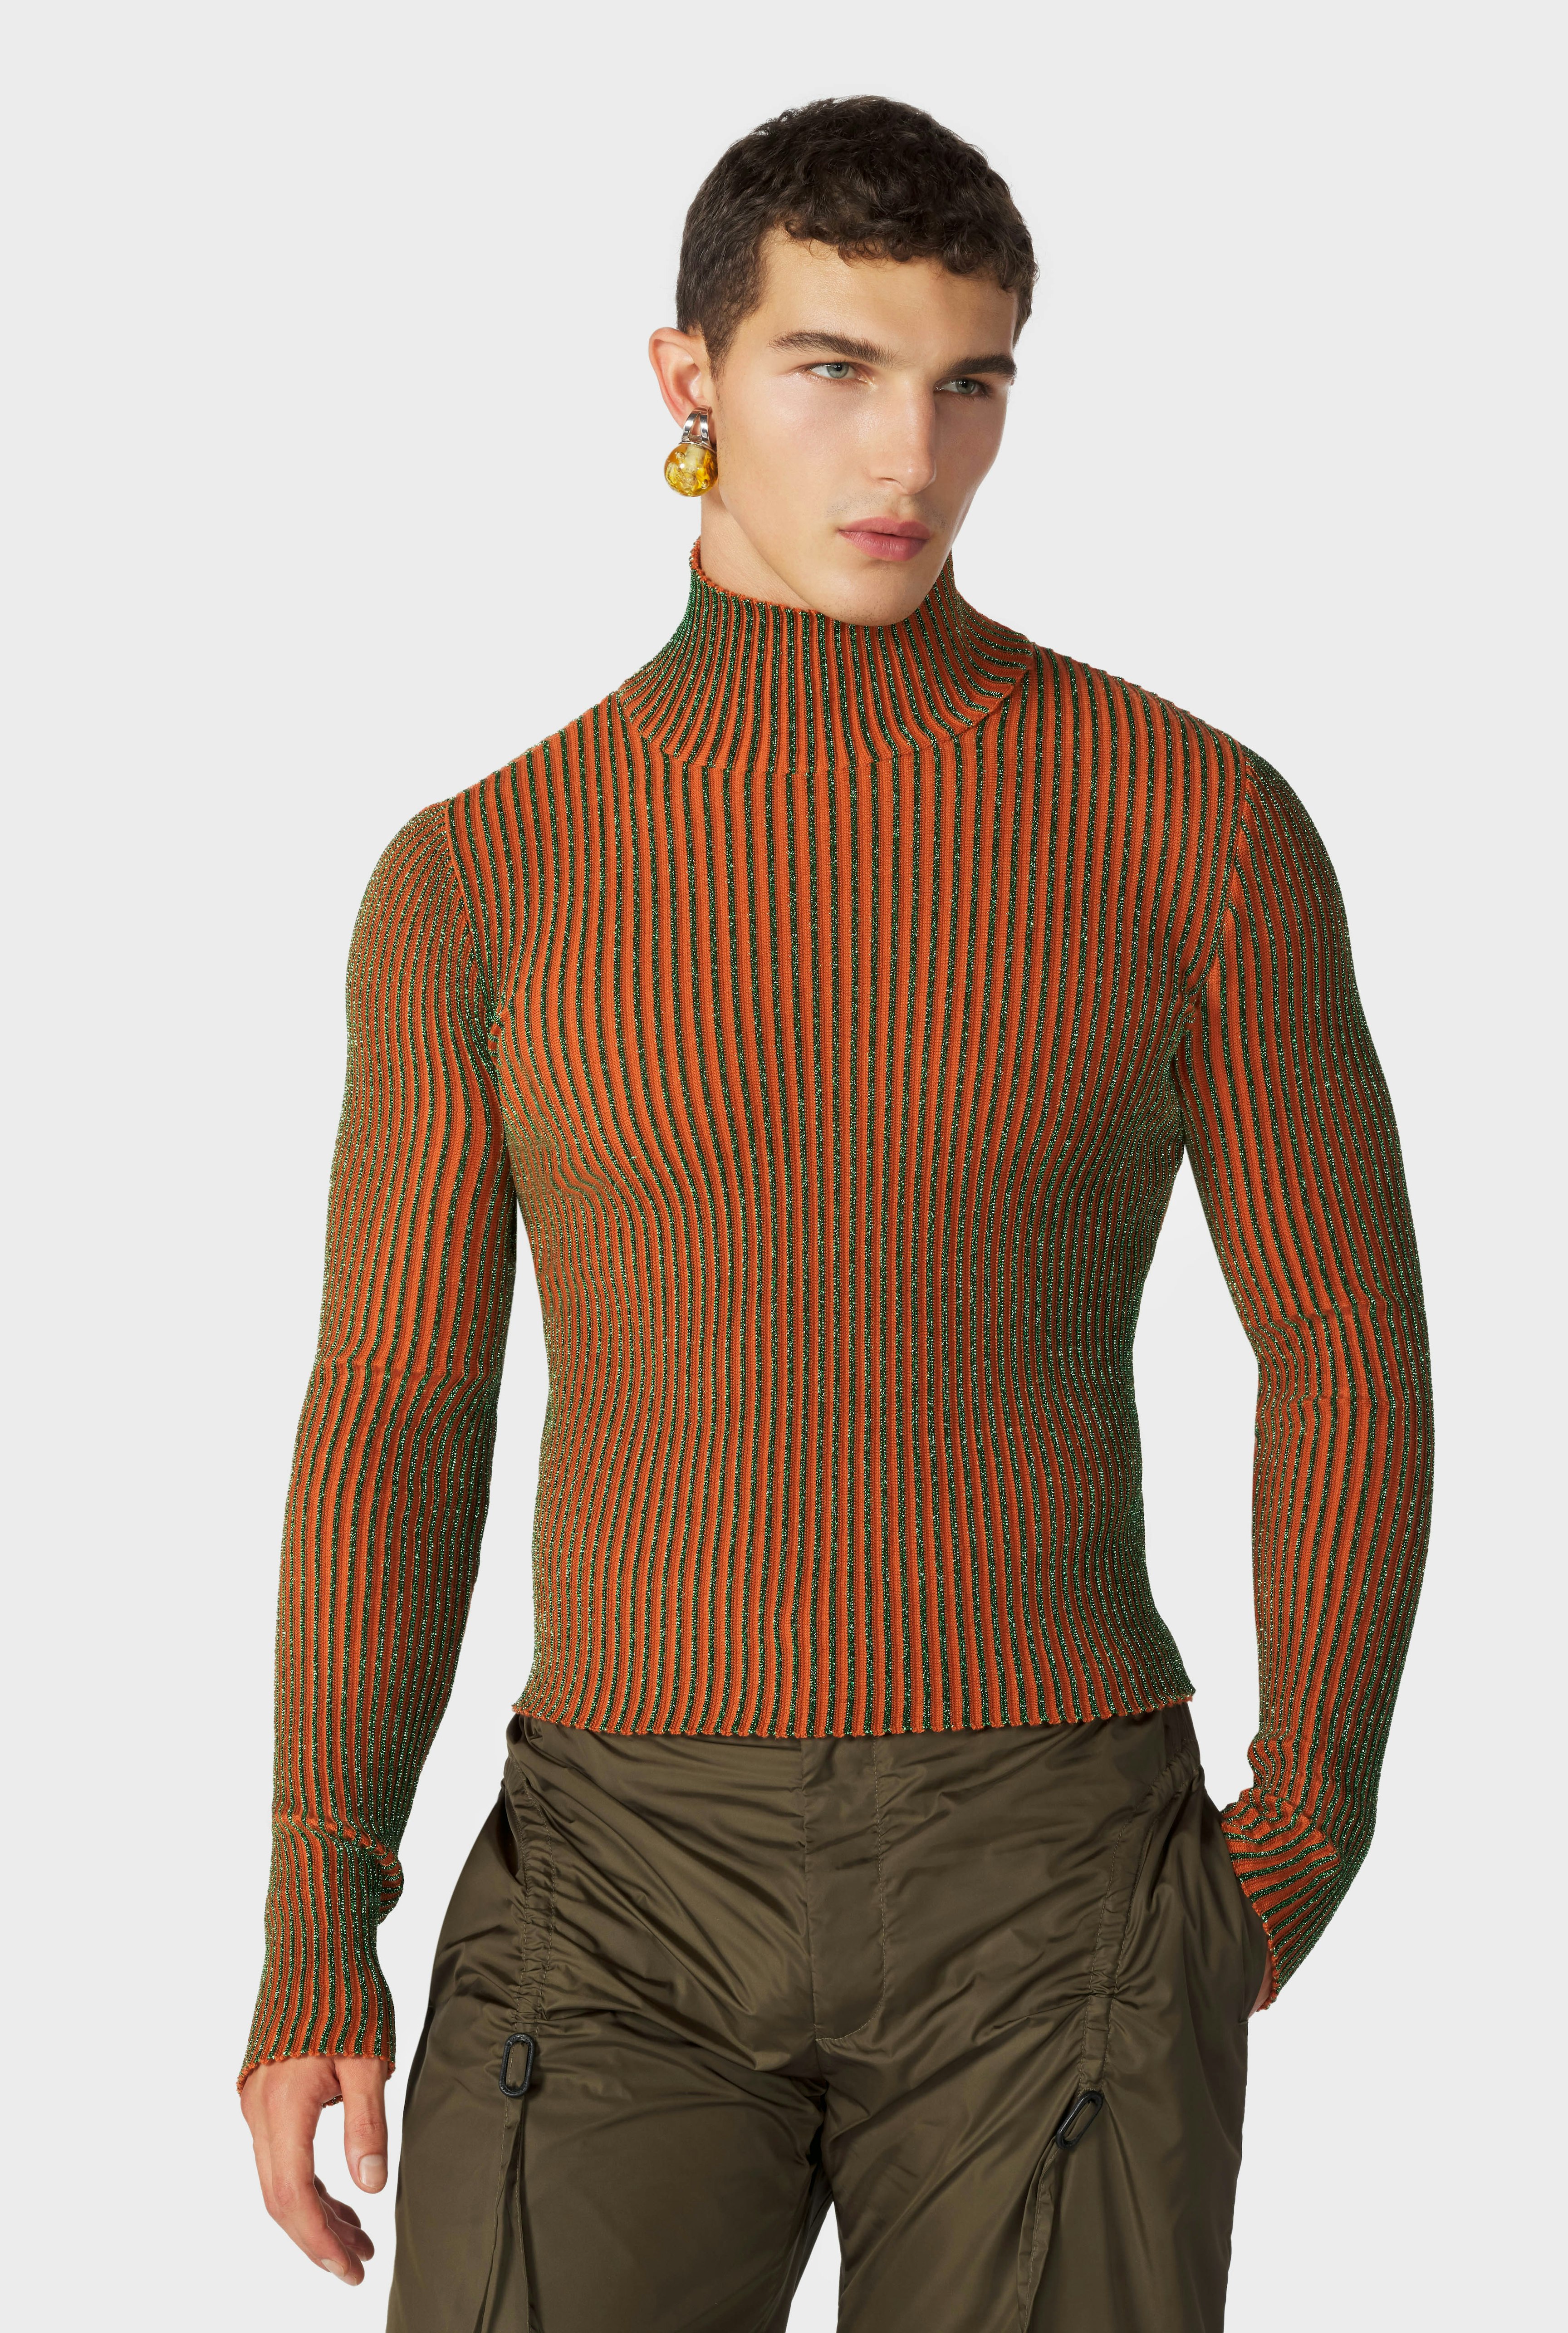 The Orange Cyber Knit Top